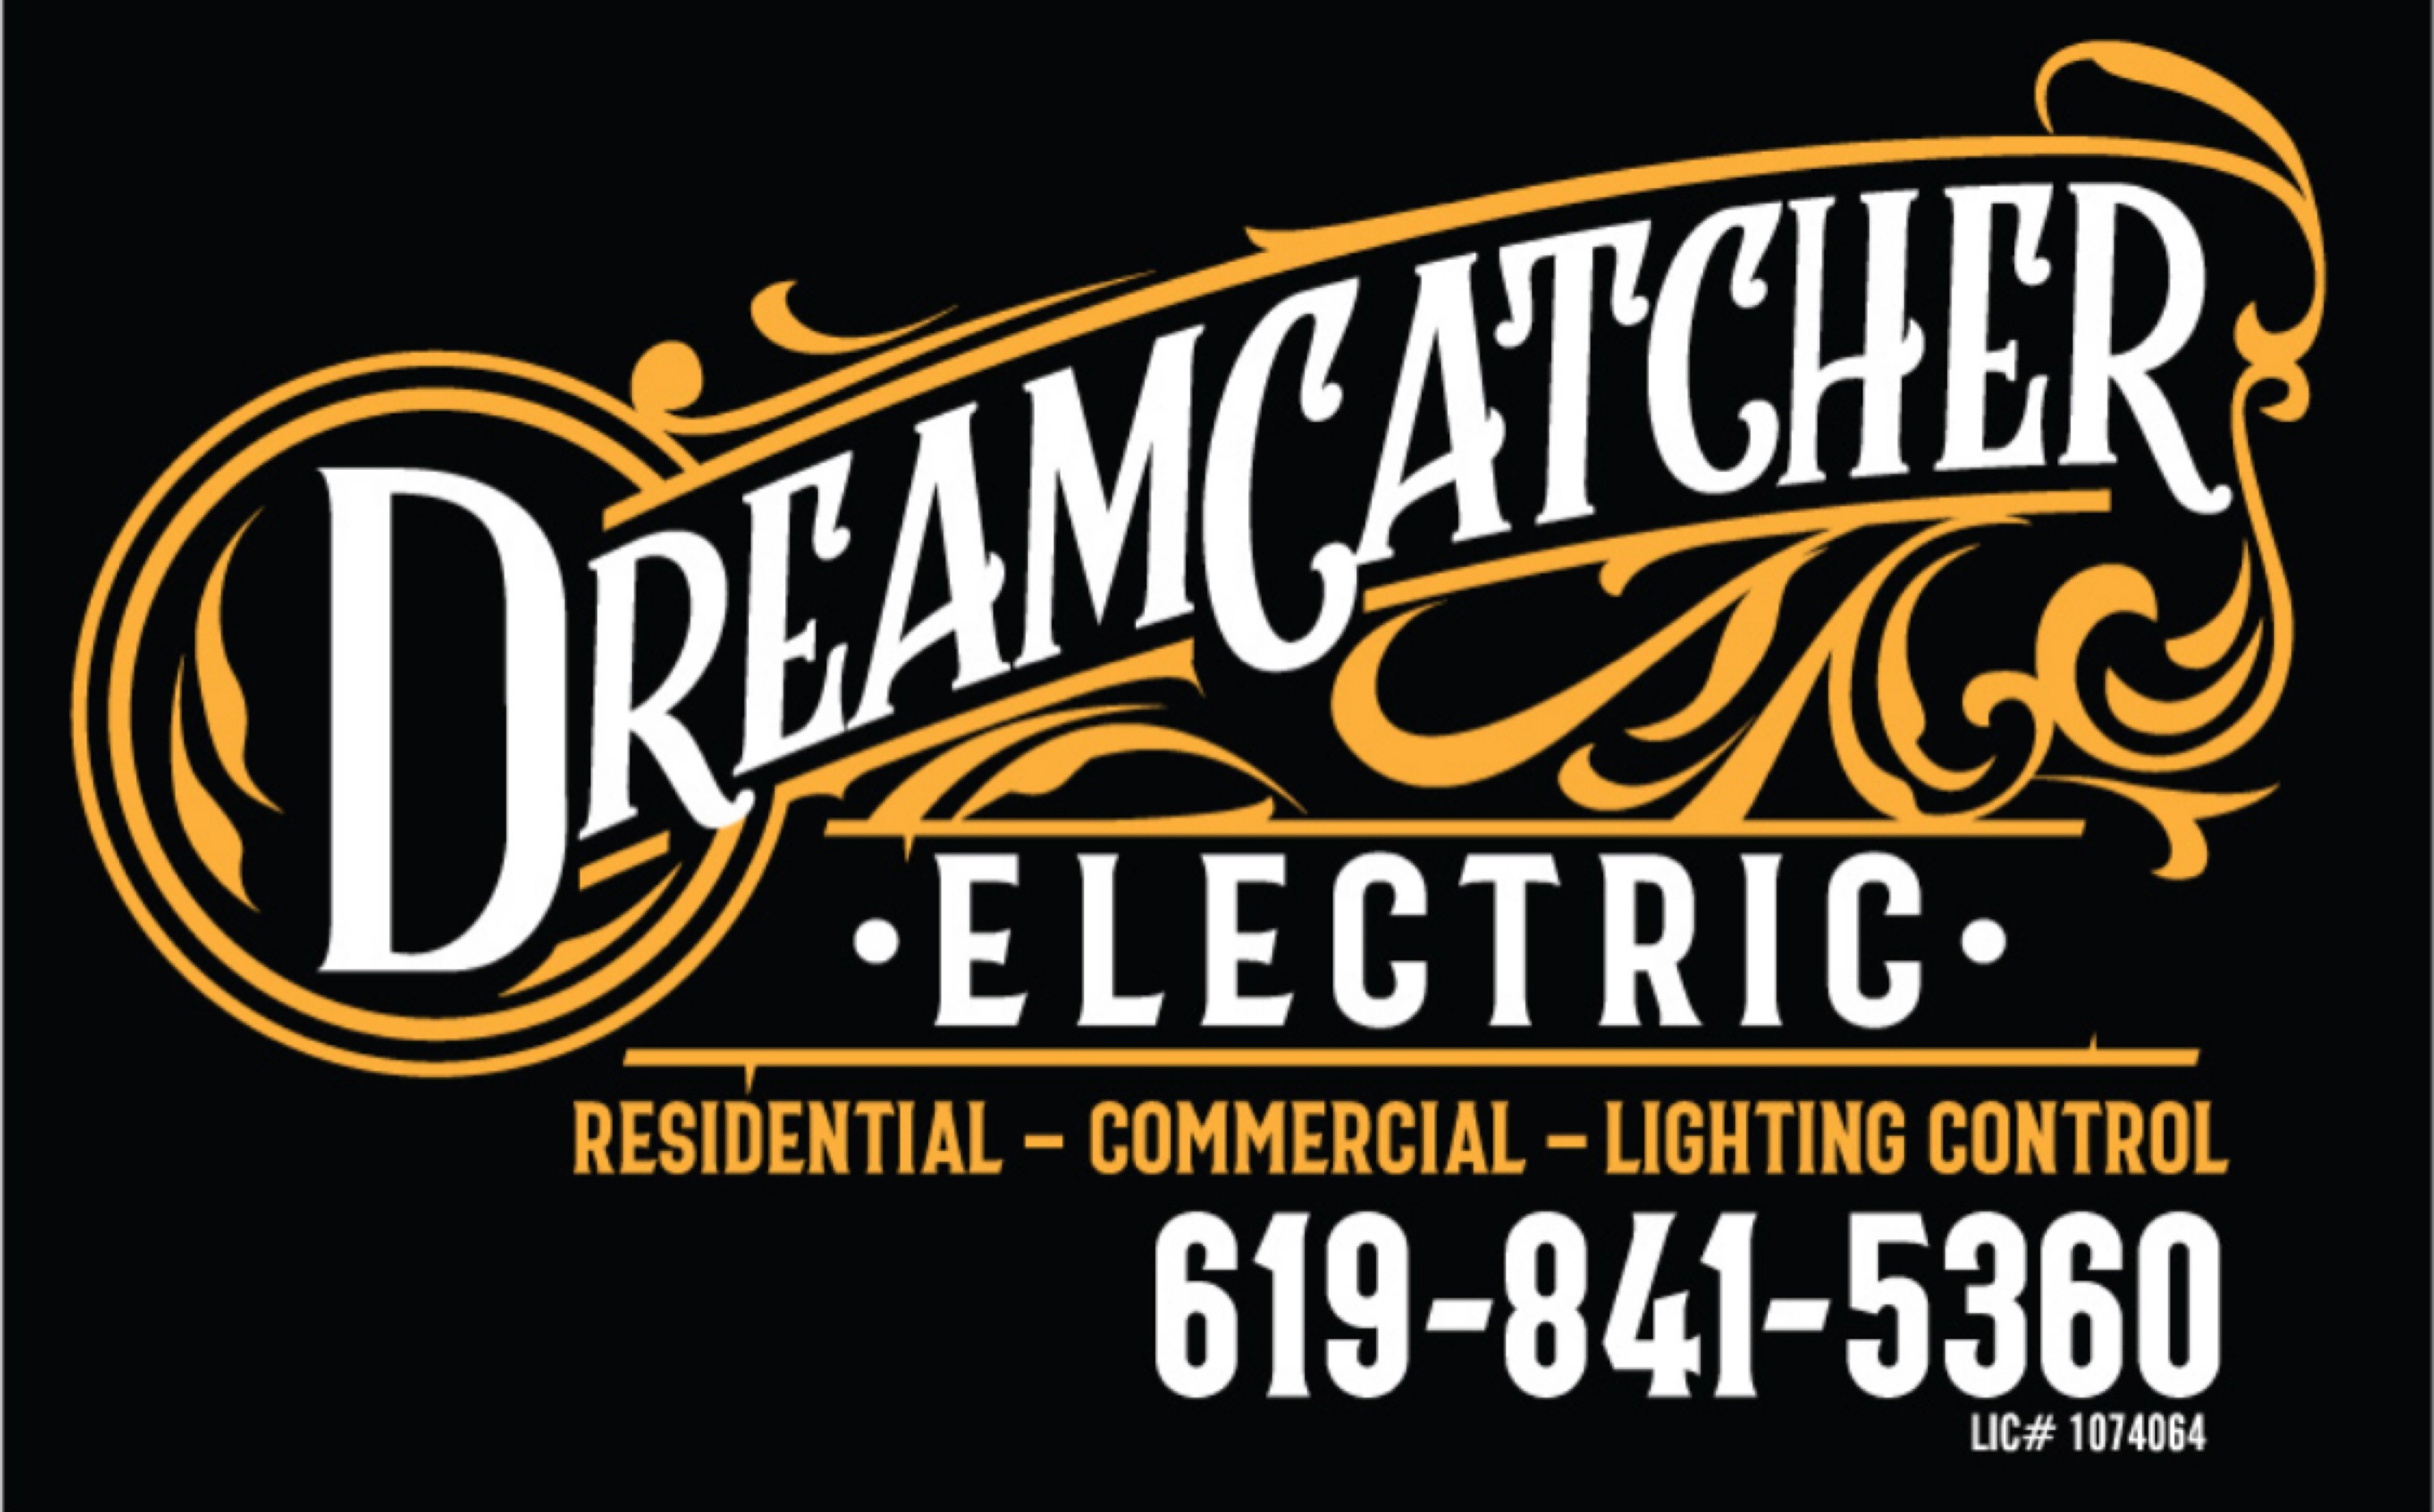 Dreamcatcher Electric Logo